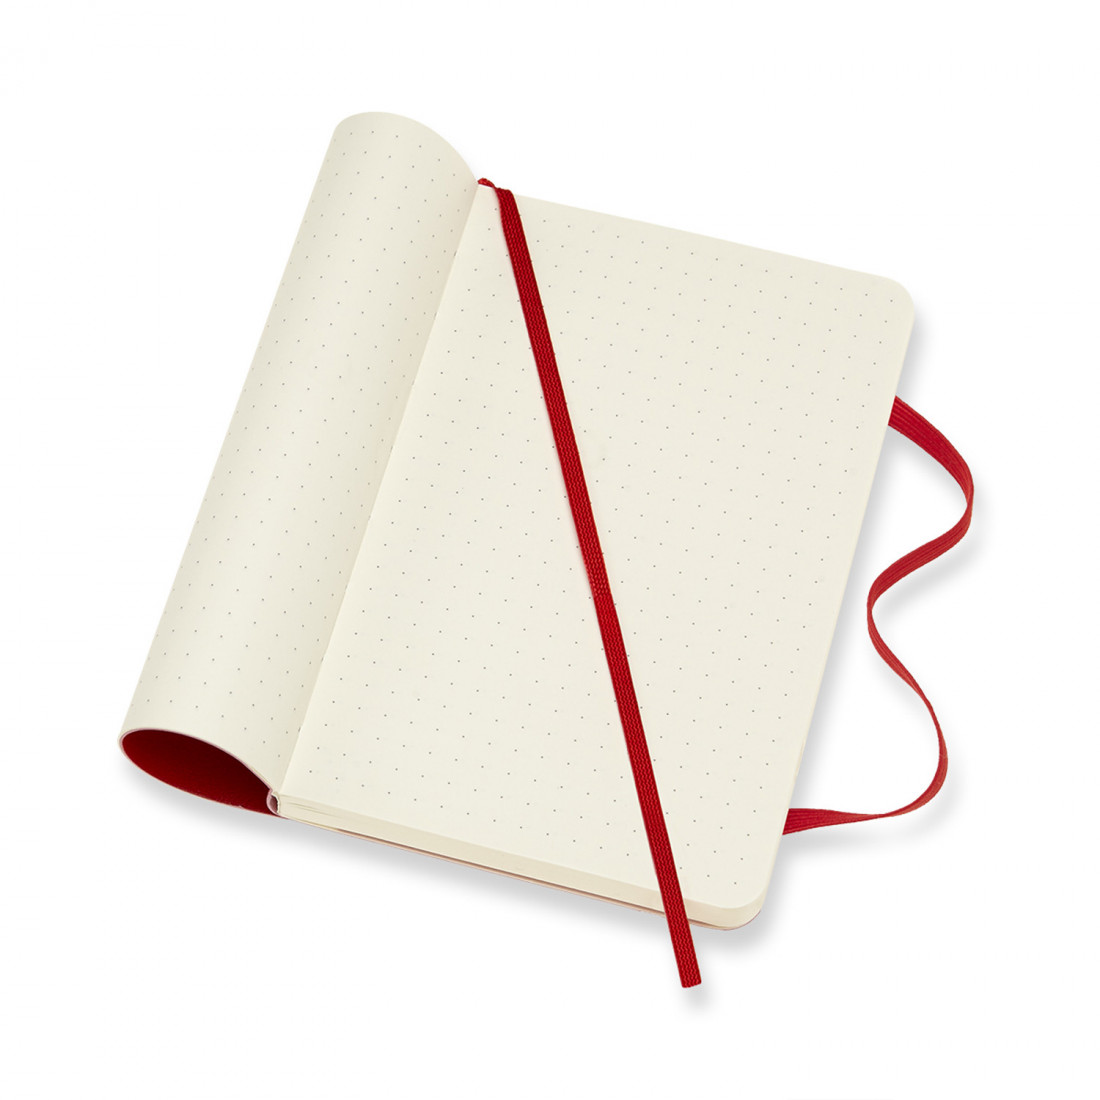 Notebook Pocket 9x14 Dotted Scarlet Red Soft Cover Moleskine